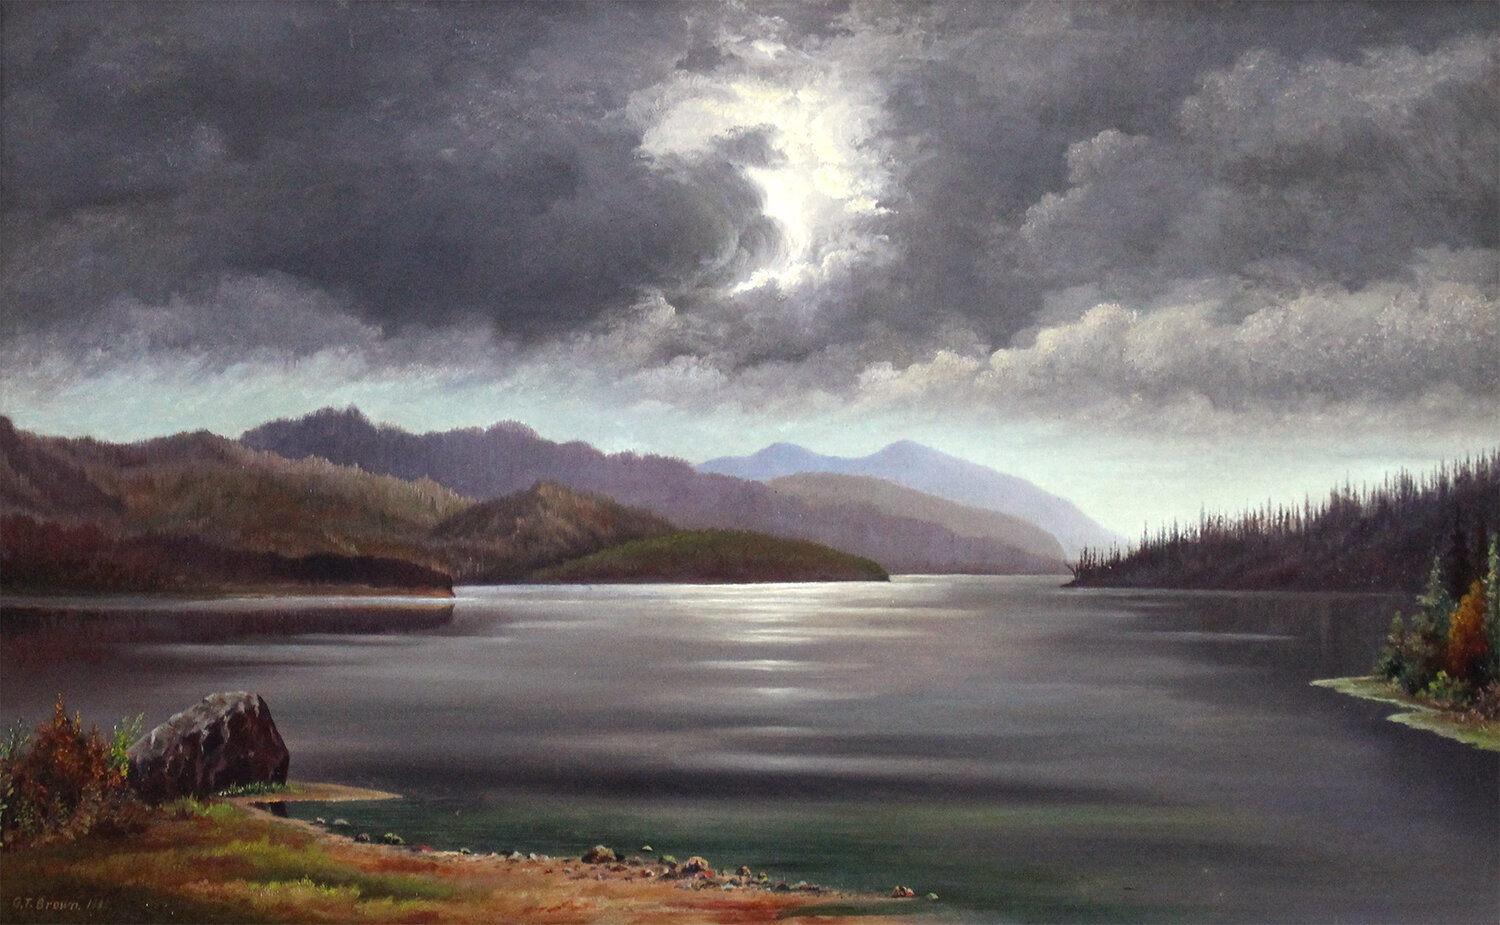 Grafton Tyler Brown (American/Canadian 1841-1918) 'Thunder Storm on Shuswap Lake, B.C. September 28, 1882'